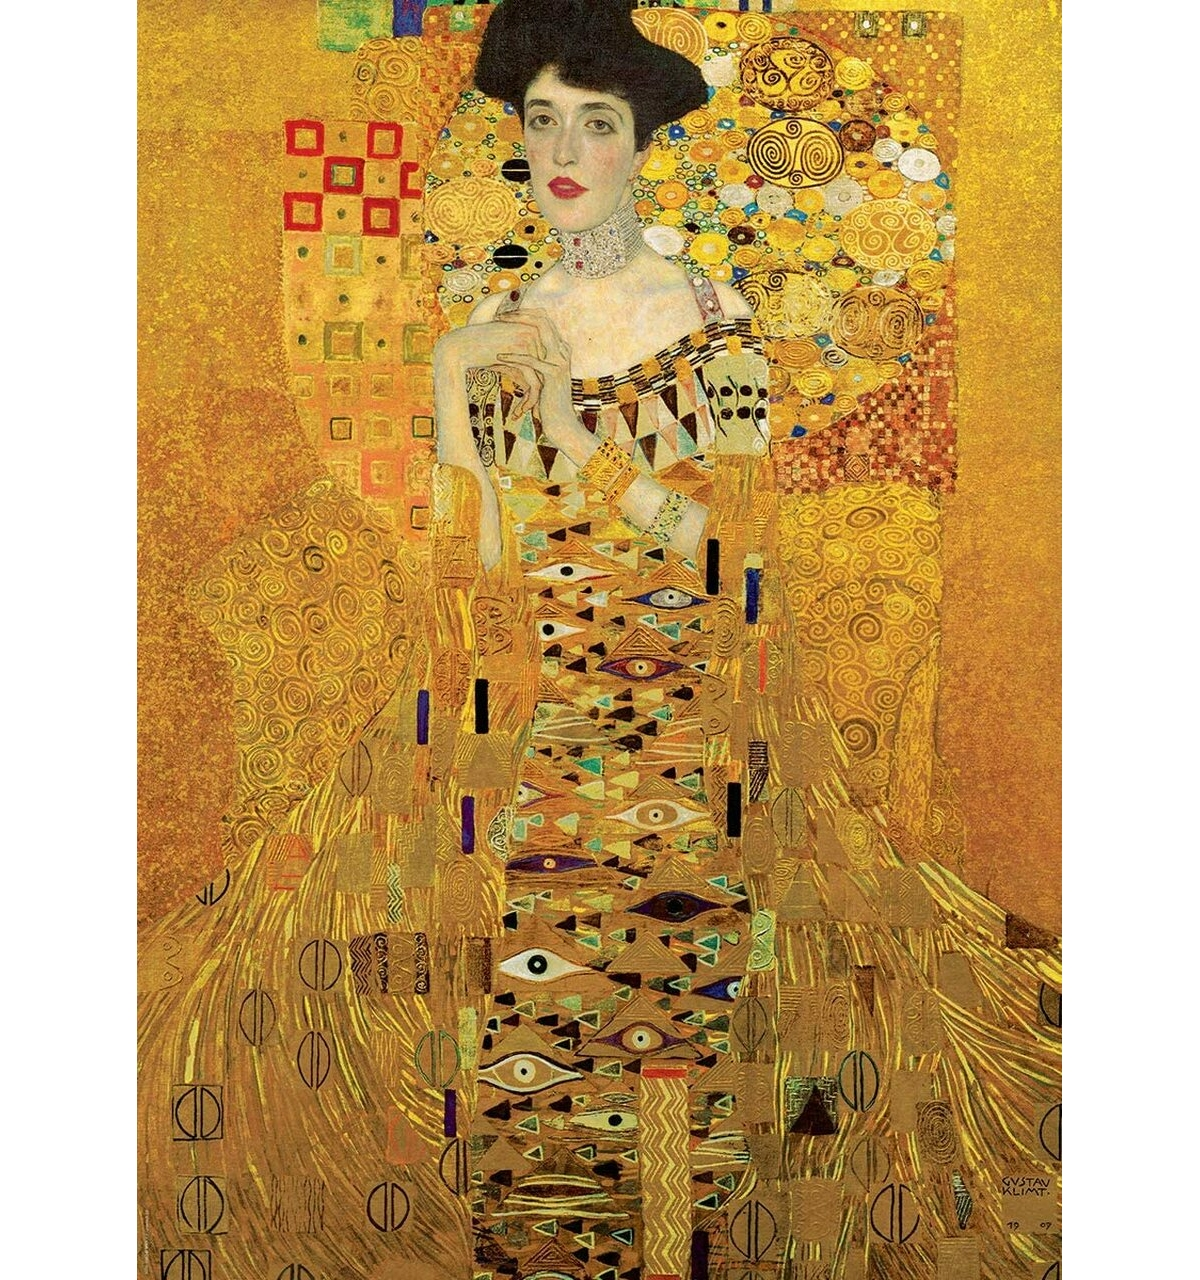 EUROGRAPHICS Adele Bloch I - (1000) Gustav Klimt Bauer Puzzle